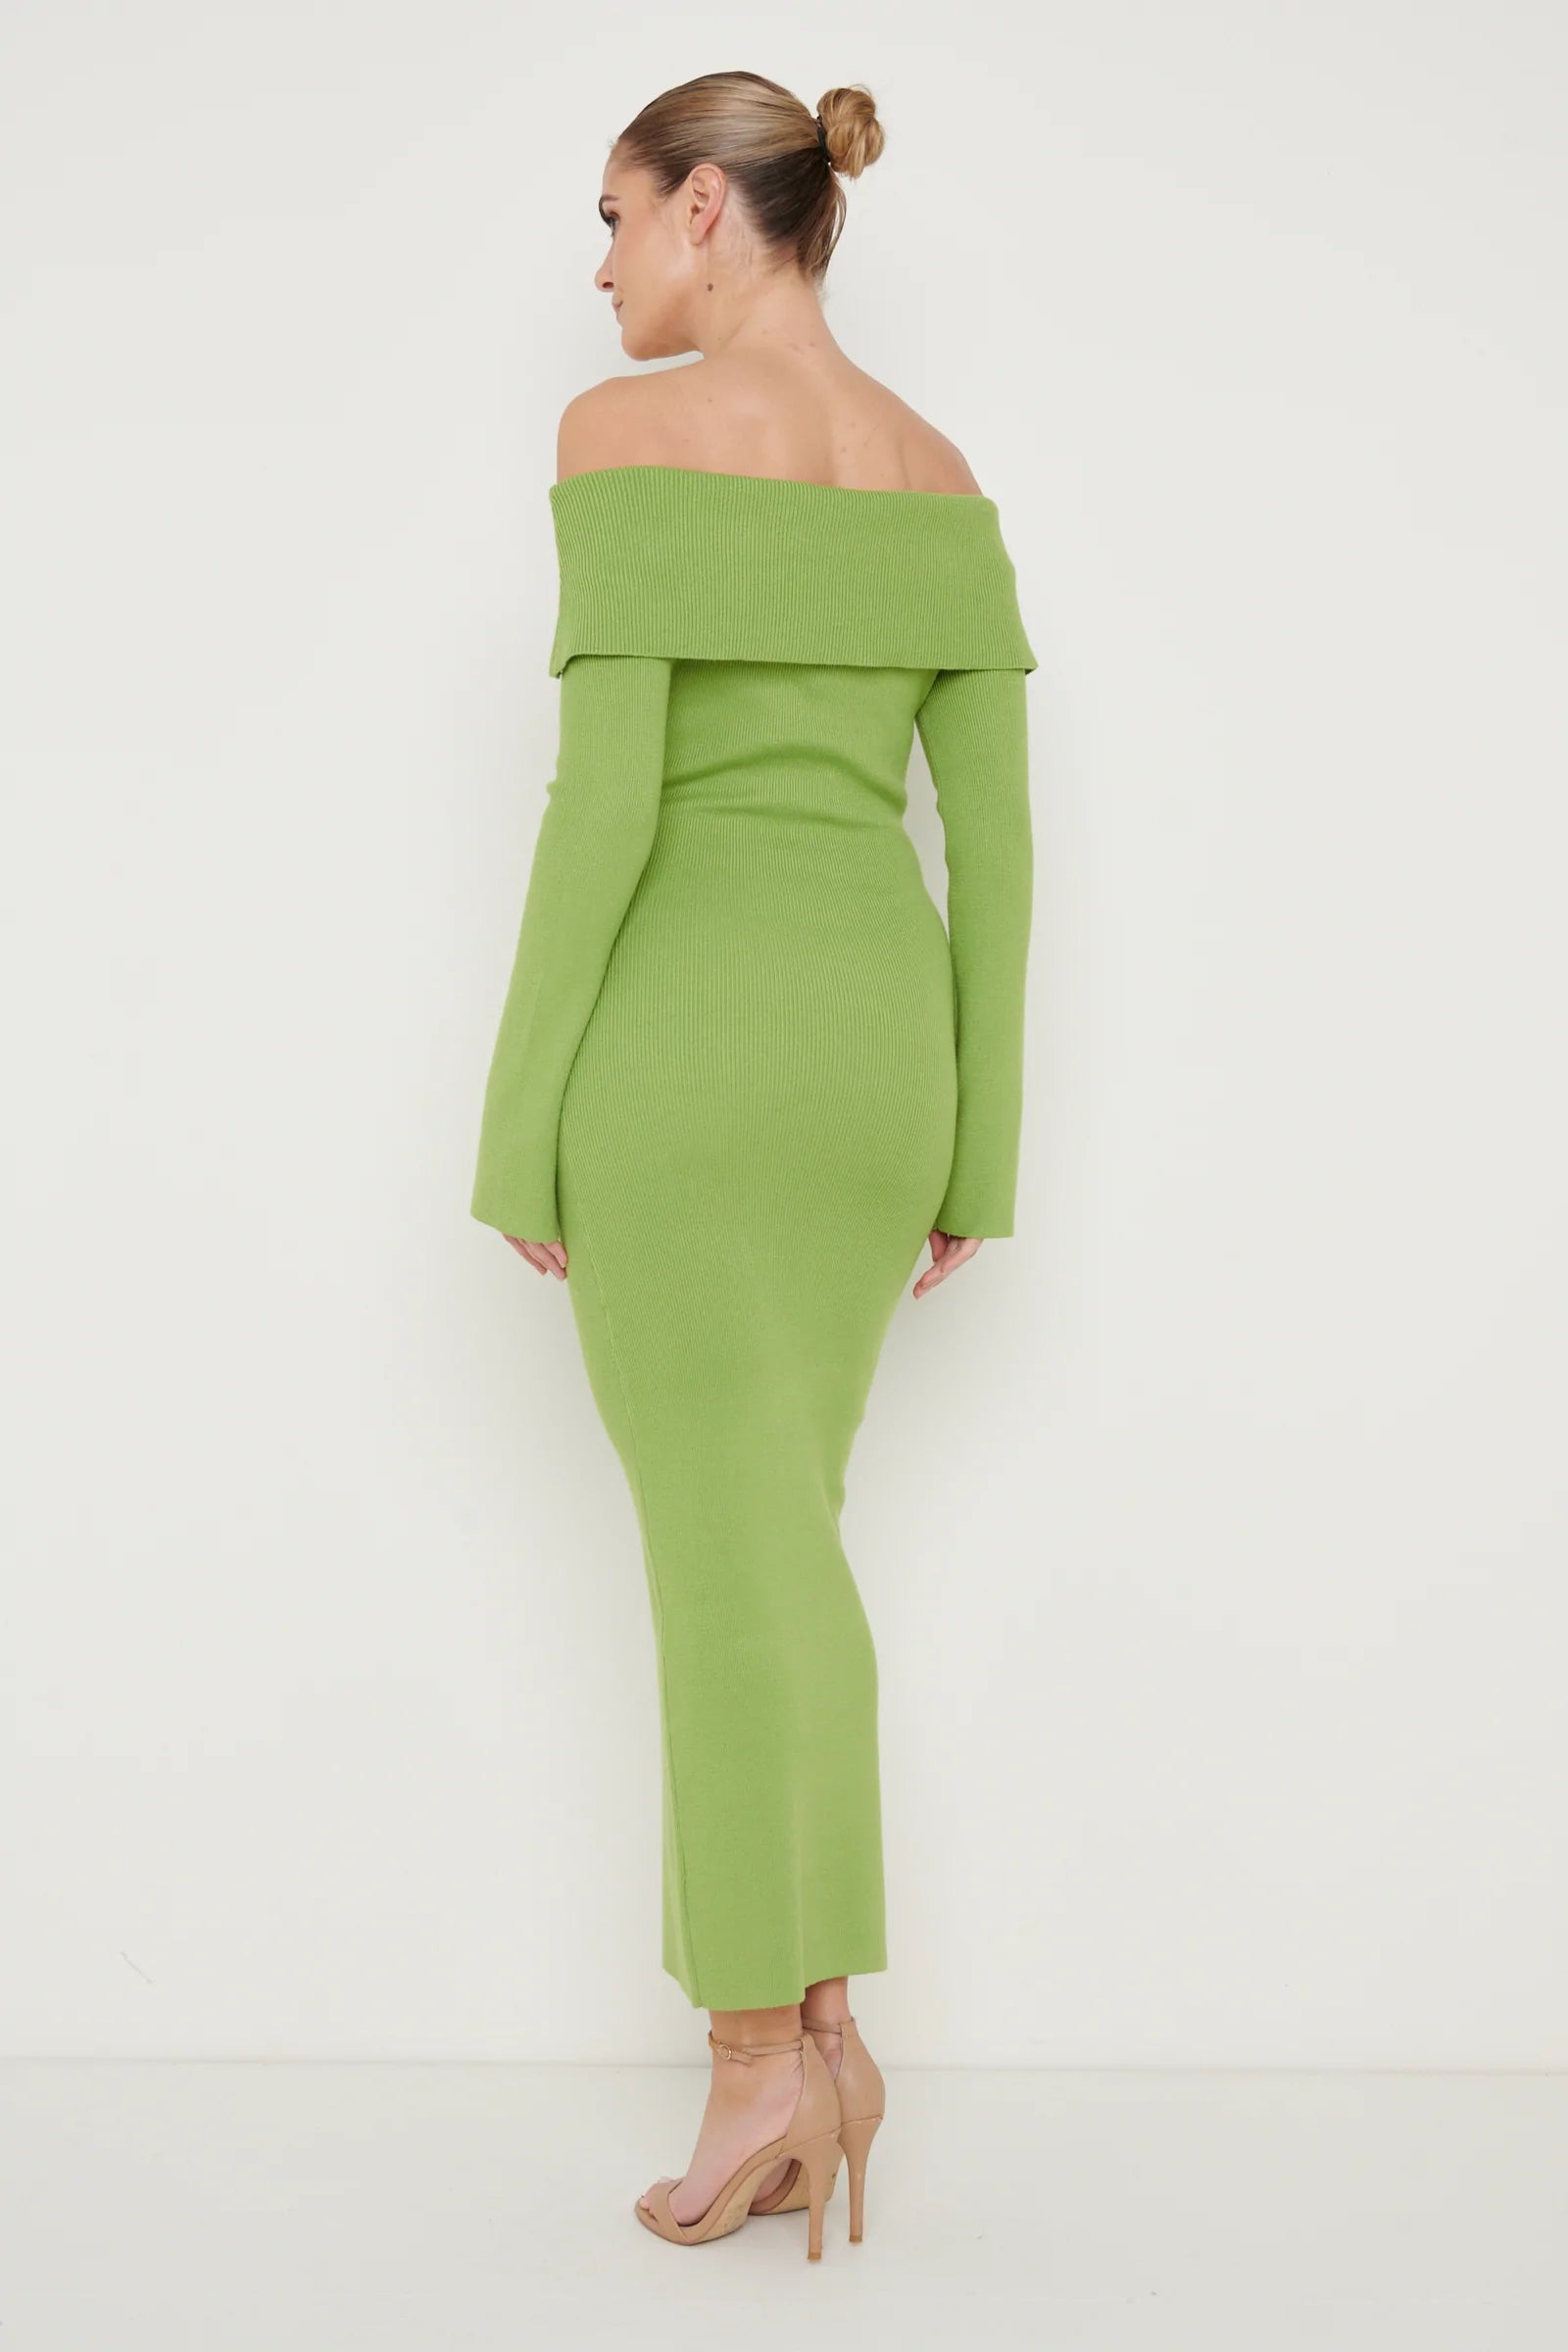 Soreya Bardot Knit Dress (Green)